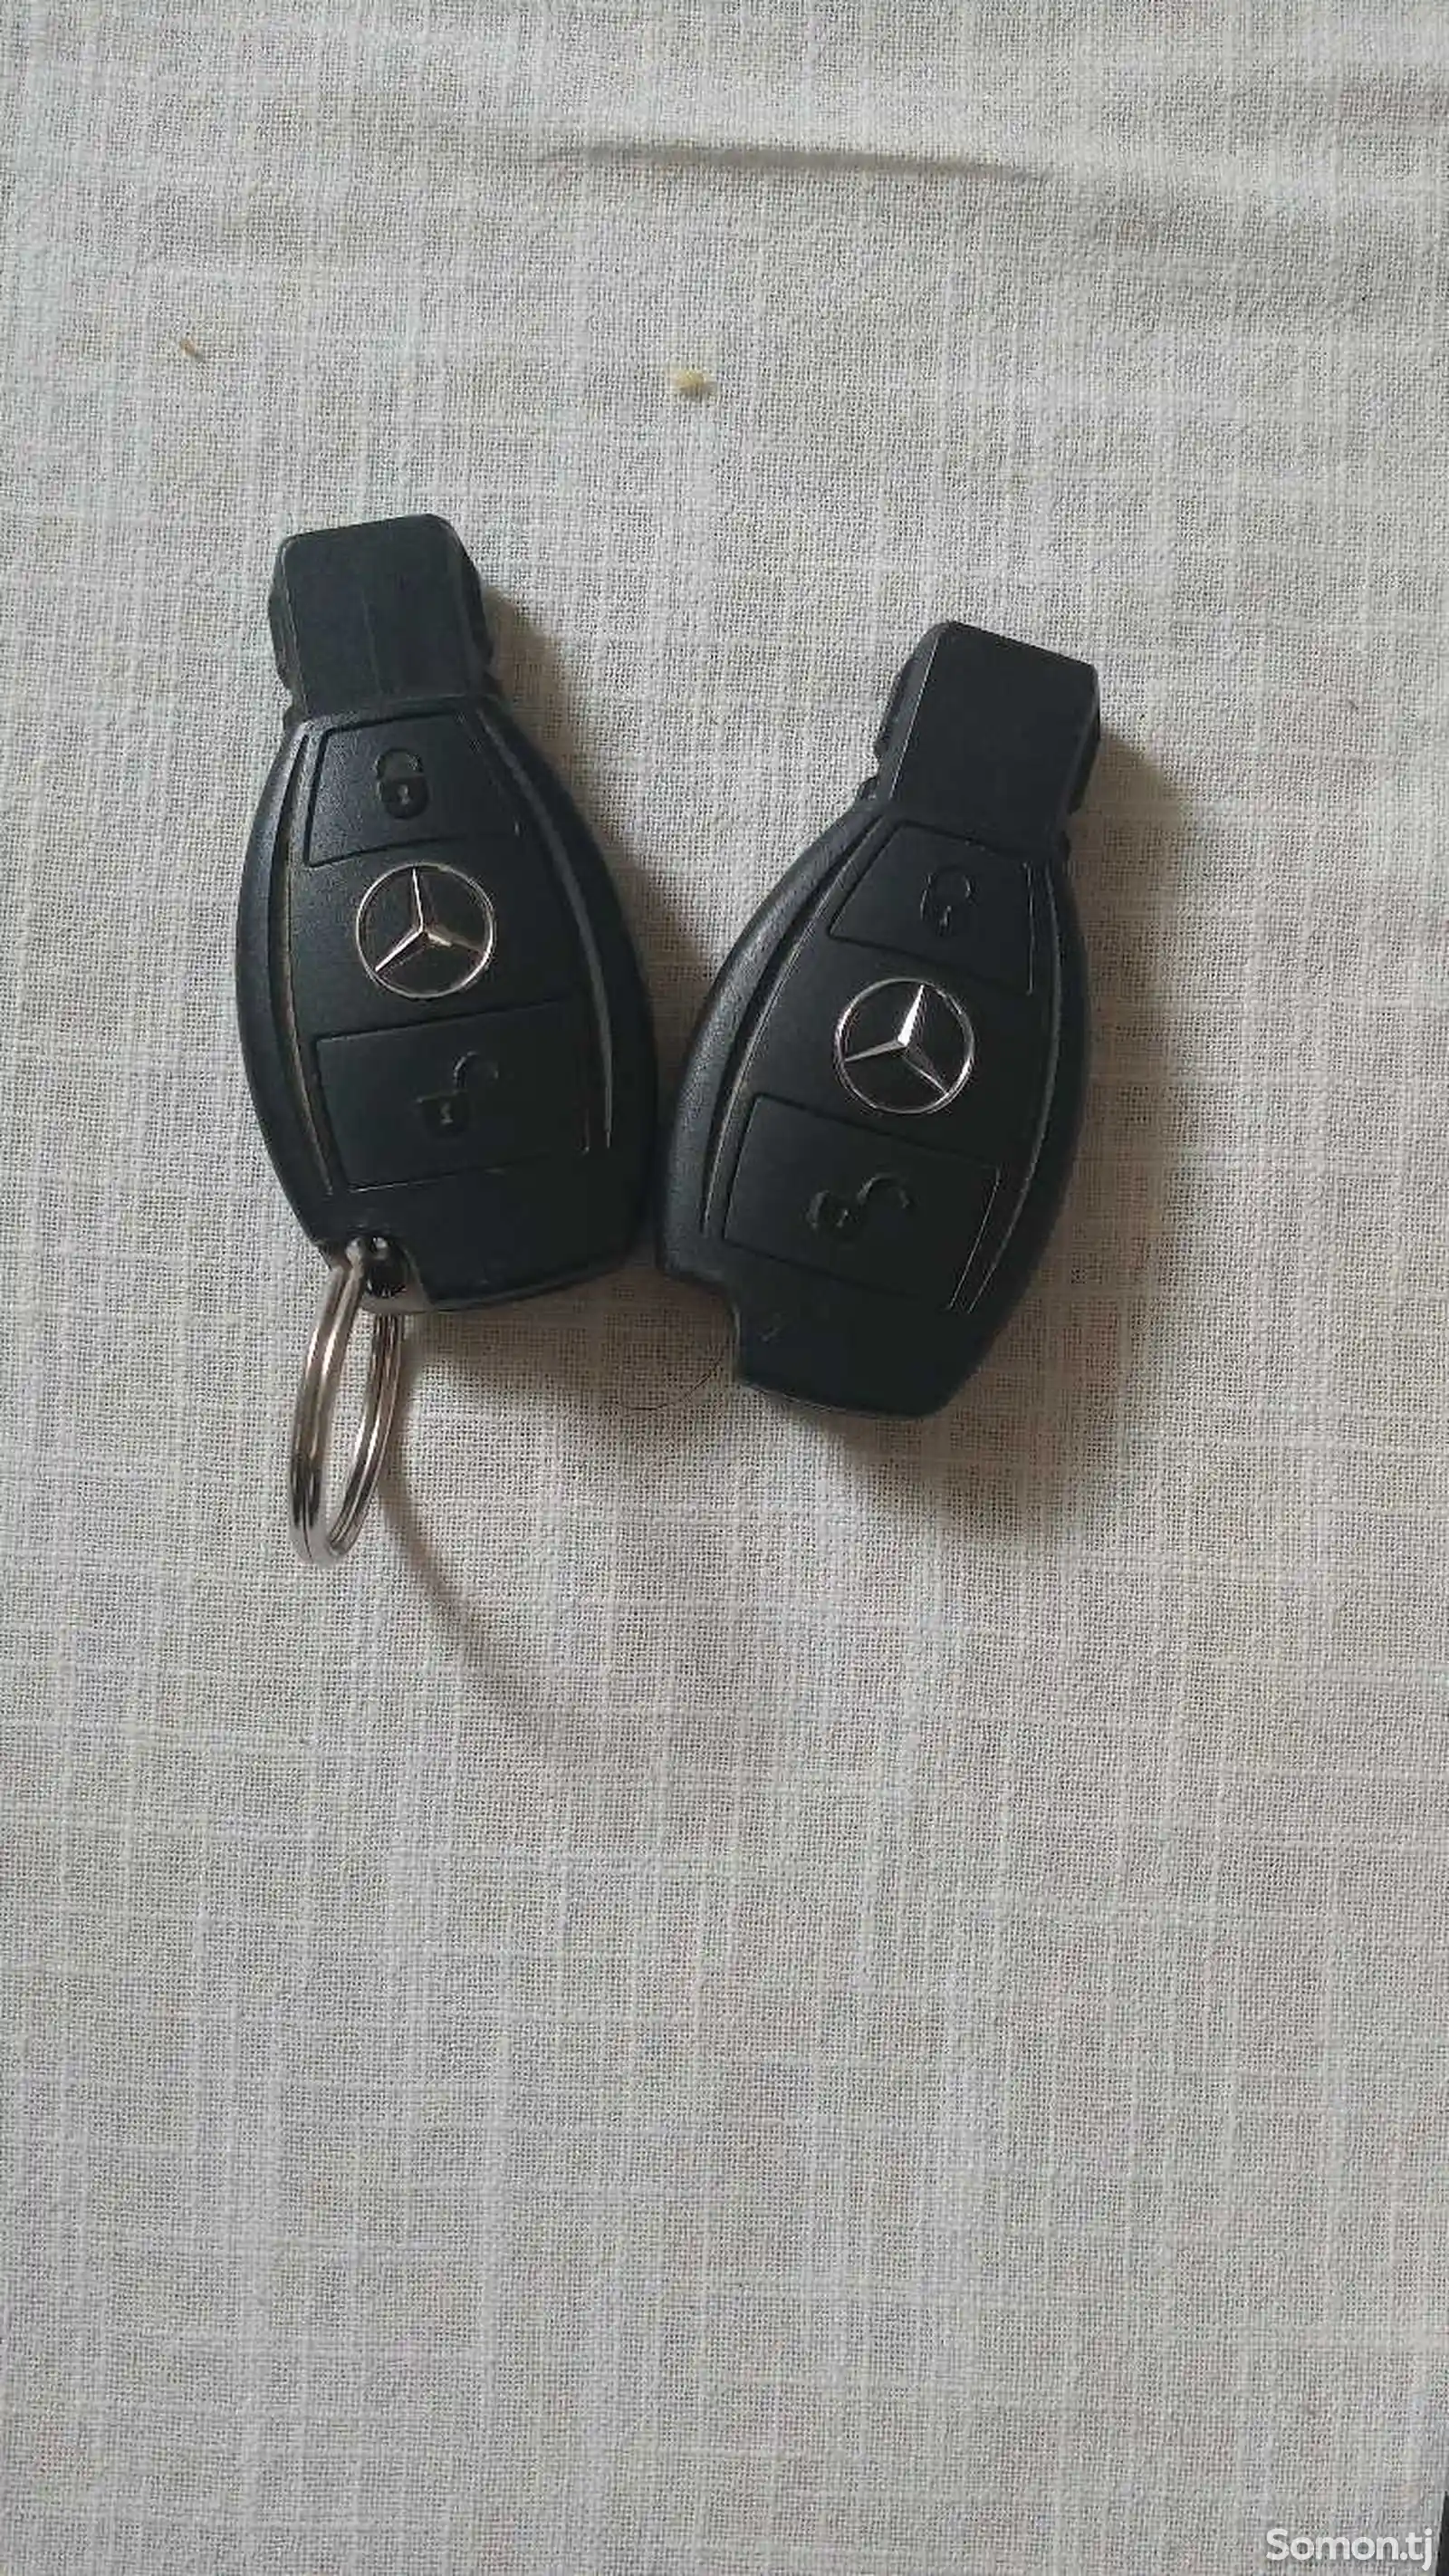 Ключи для Mercedes-Benz-2